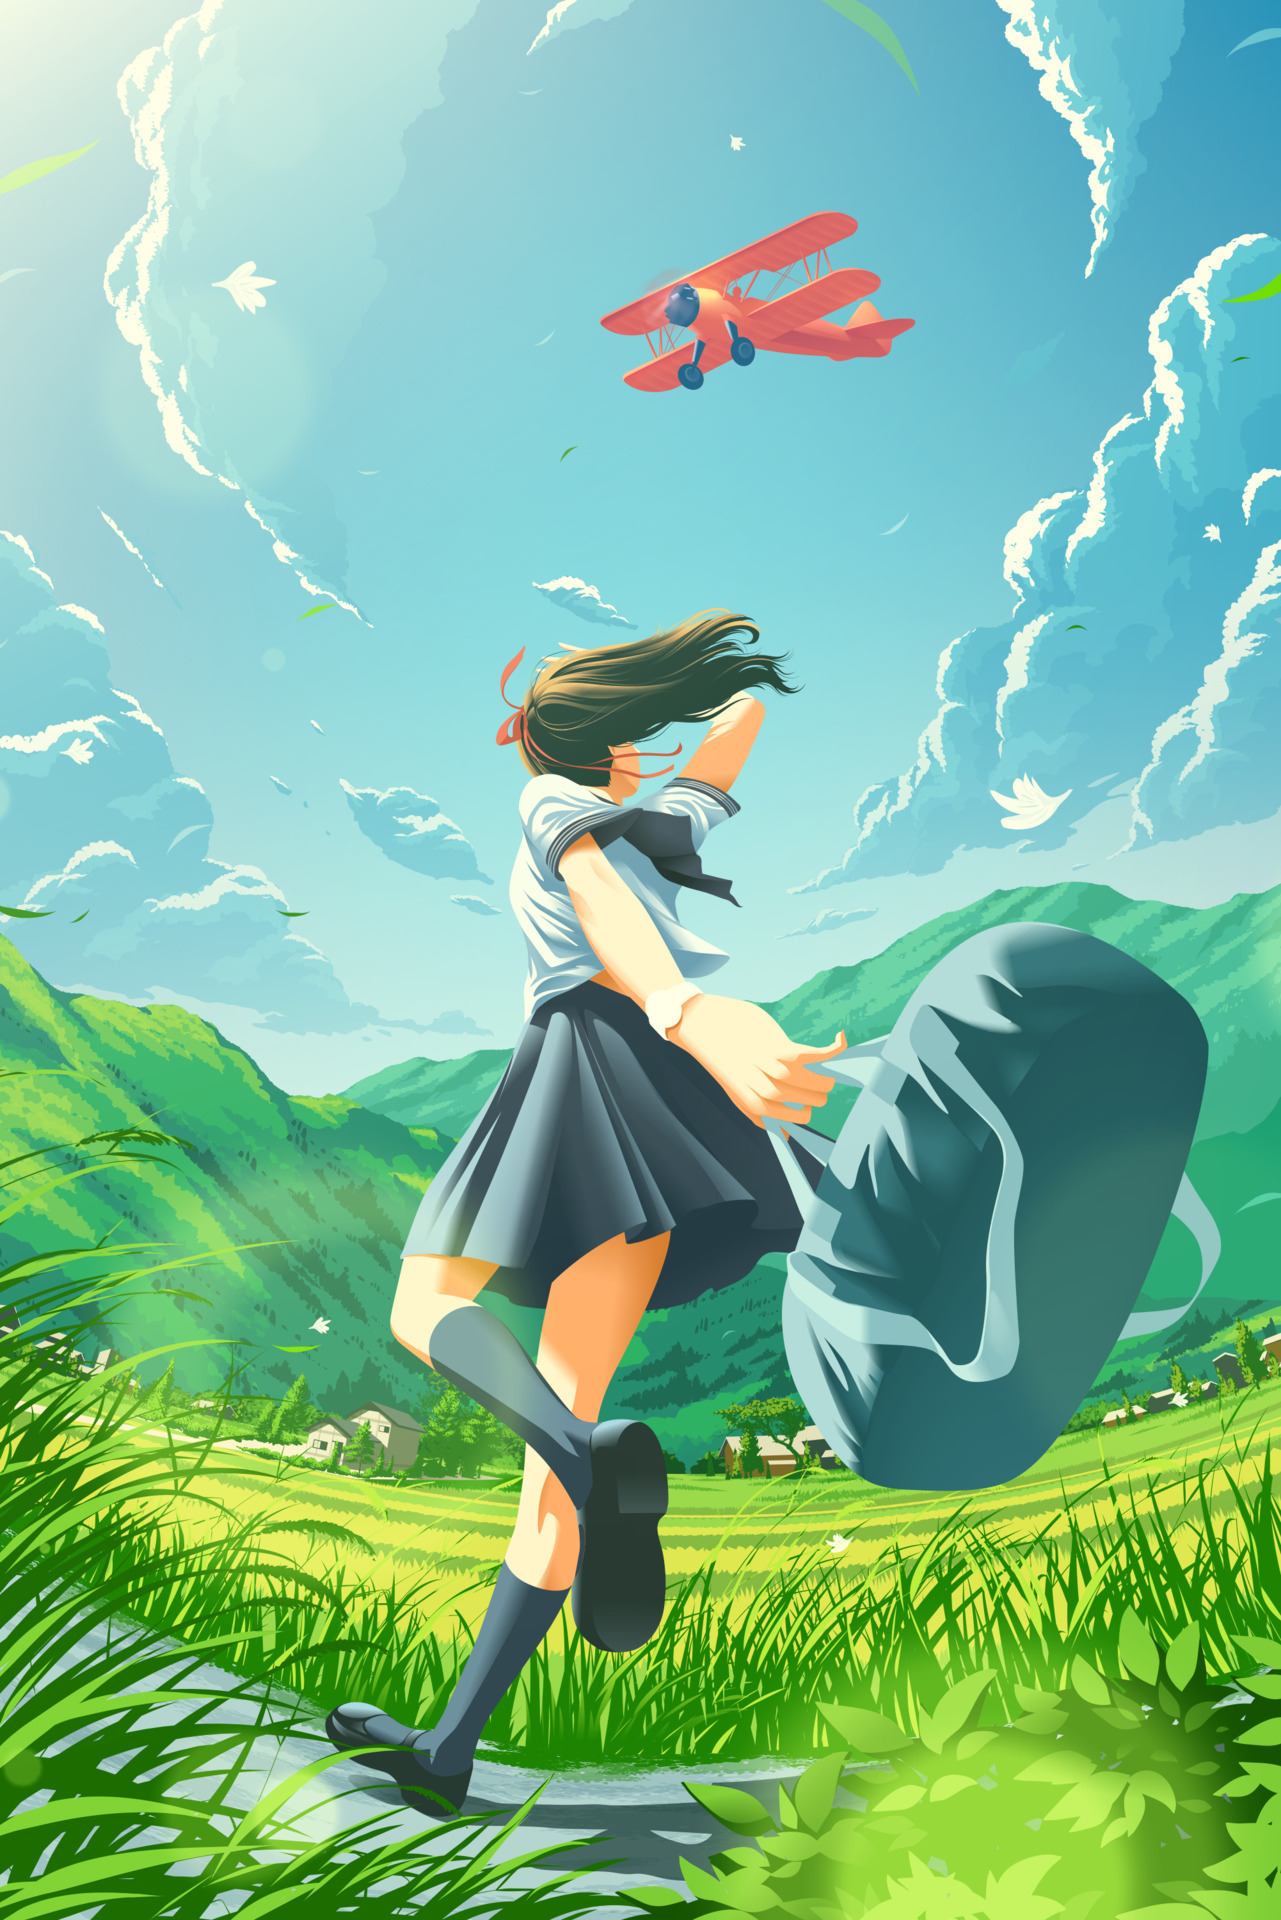 Anime Girl Running with Dog Corgi Cherry Blossom Wallpaper 4K #8.3161-demhanvico.com.vn